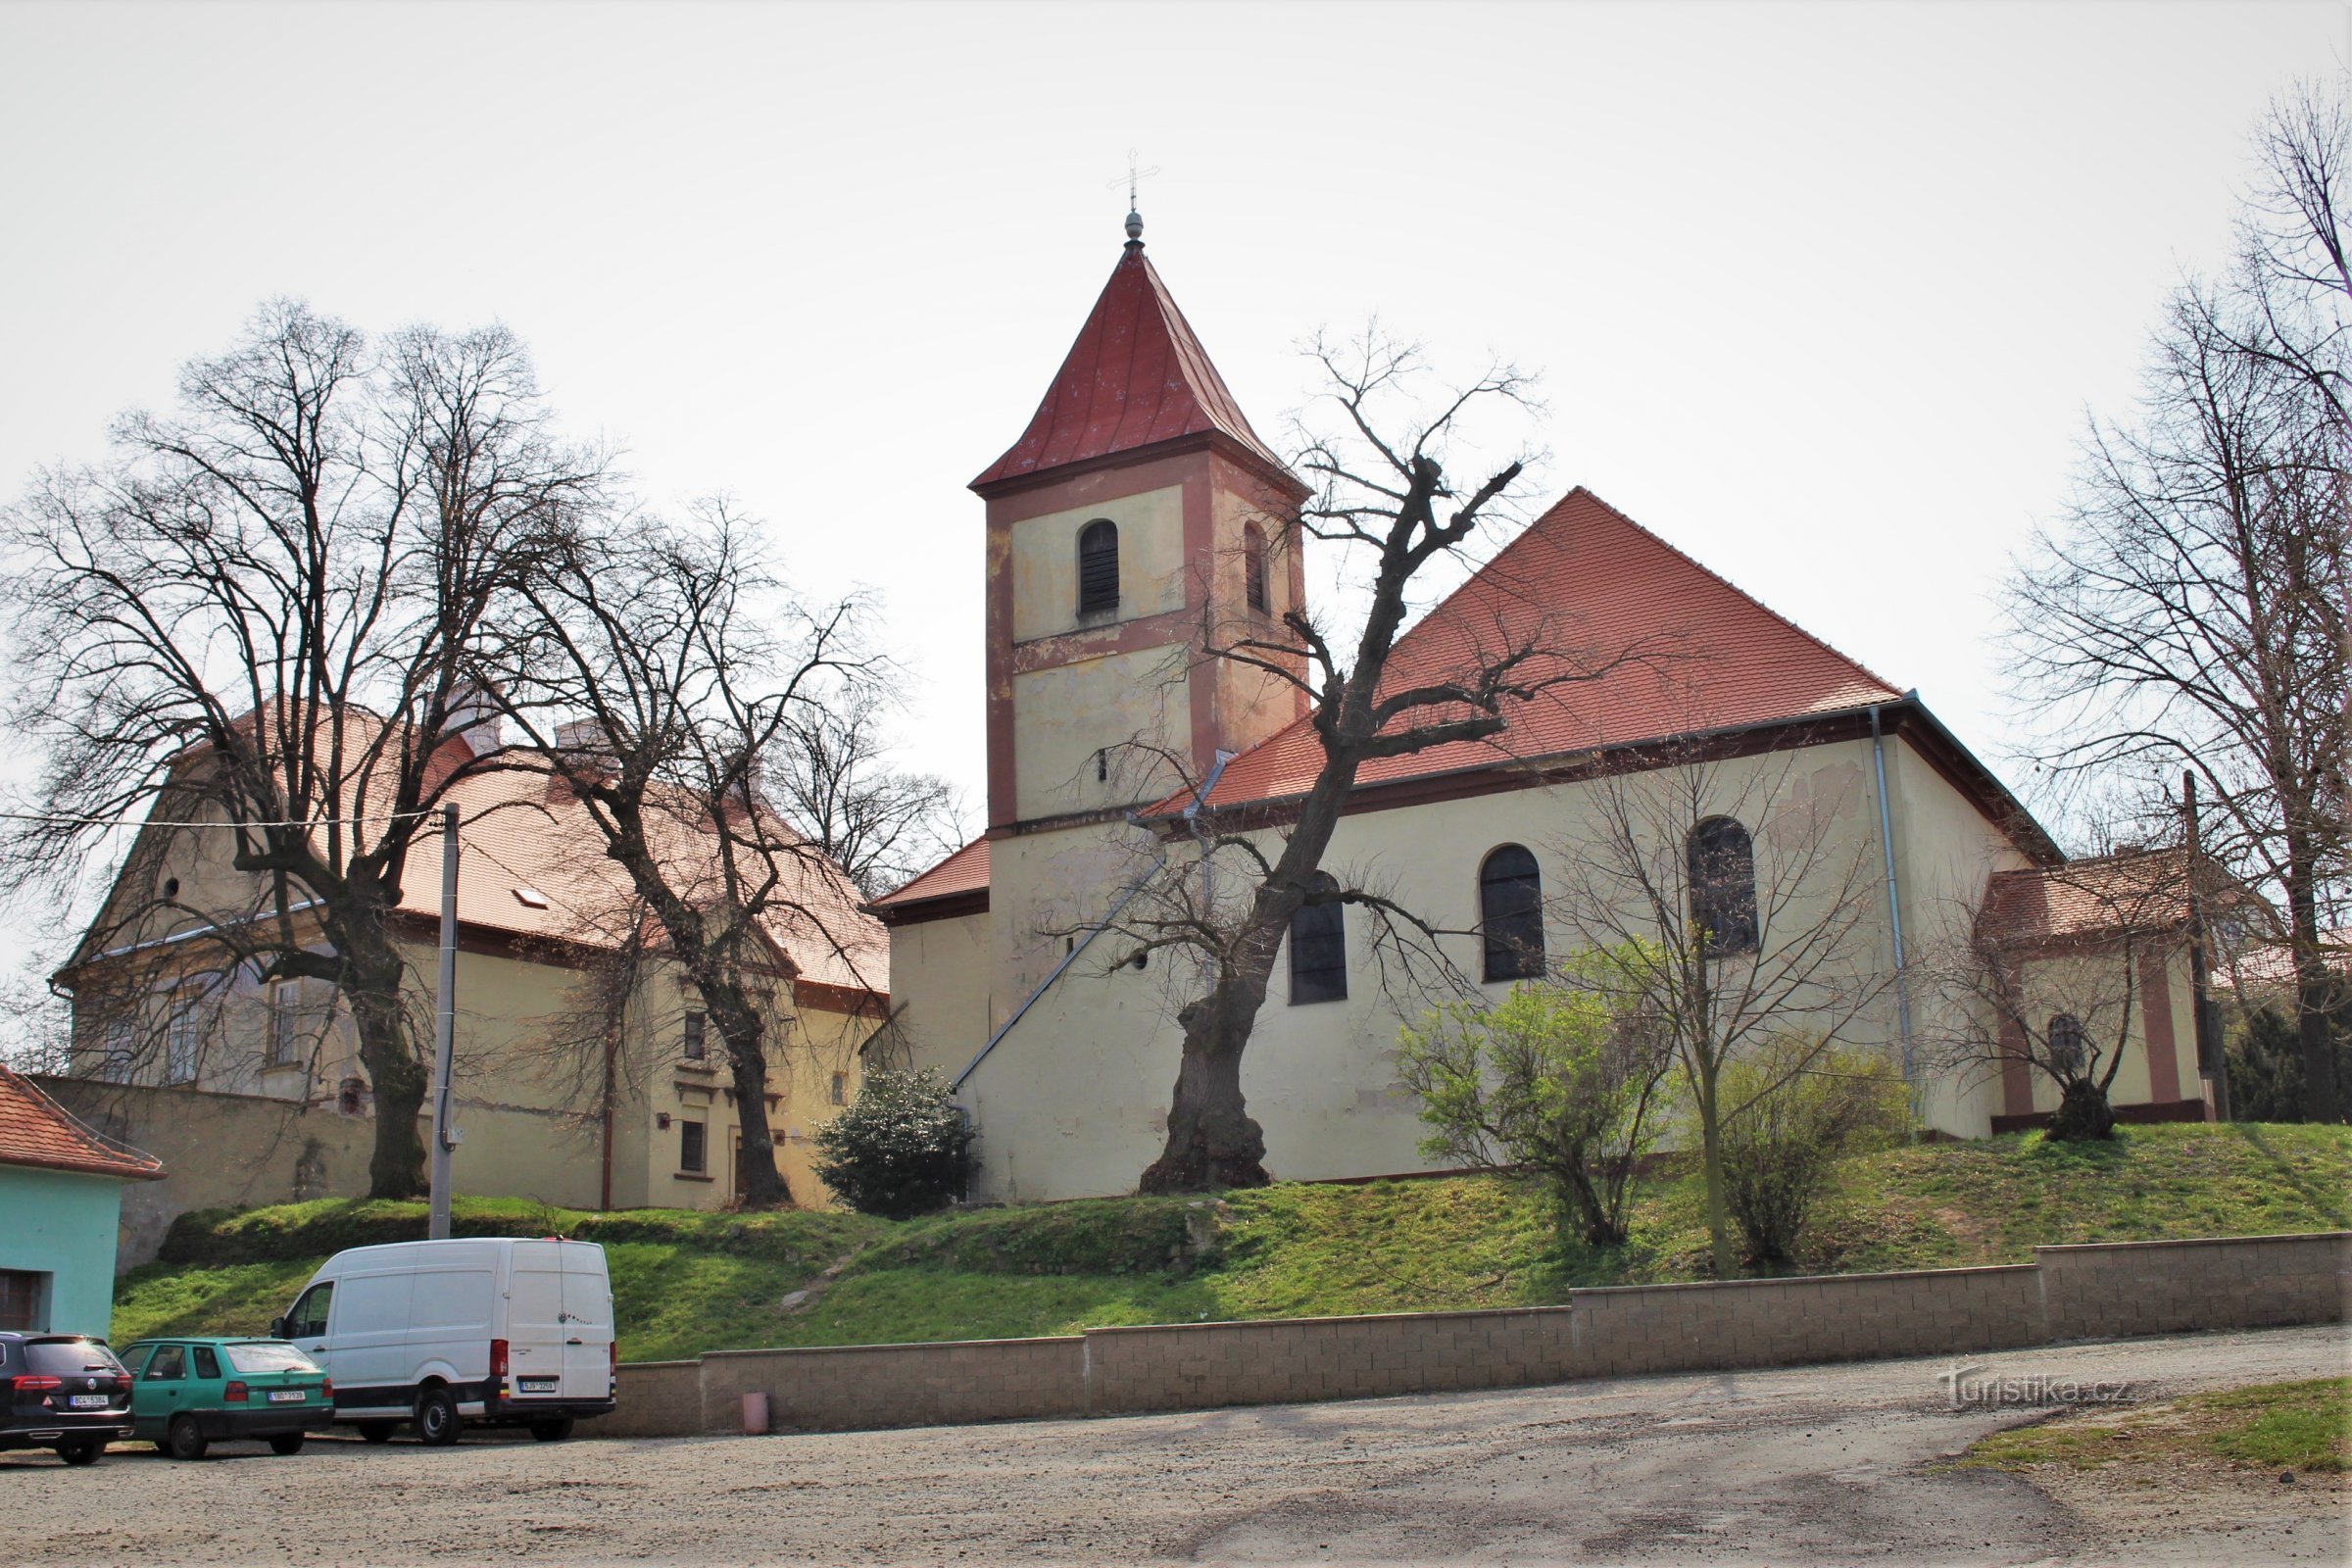 Božice - Church of St. Peter and Paul